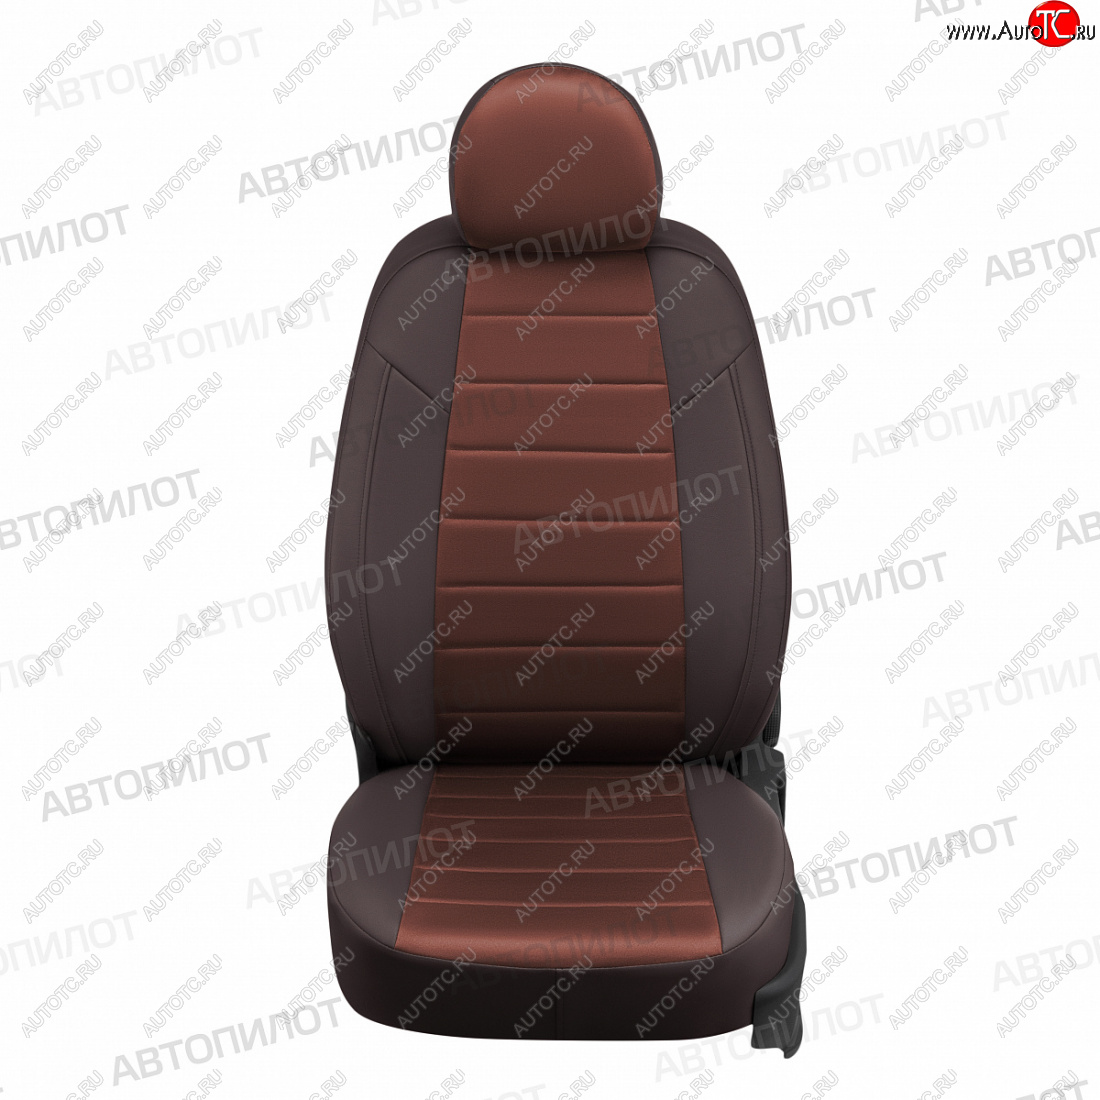 13 449 р. Чехлы сидений (экокожа/алькантара) Автопилот  KIA ProCeed  1 ED хэтчбэк 3 дв. (2006-2012) (шоколад)